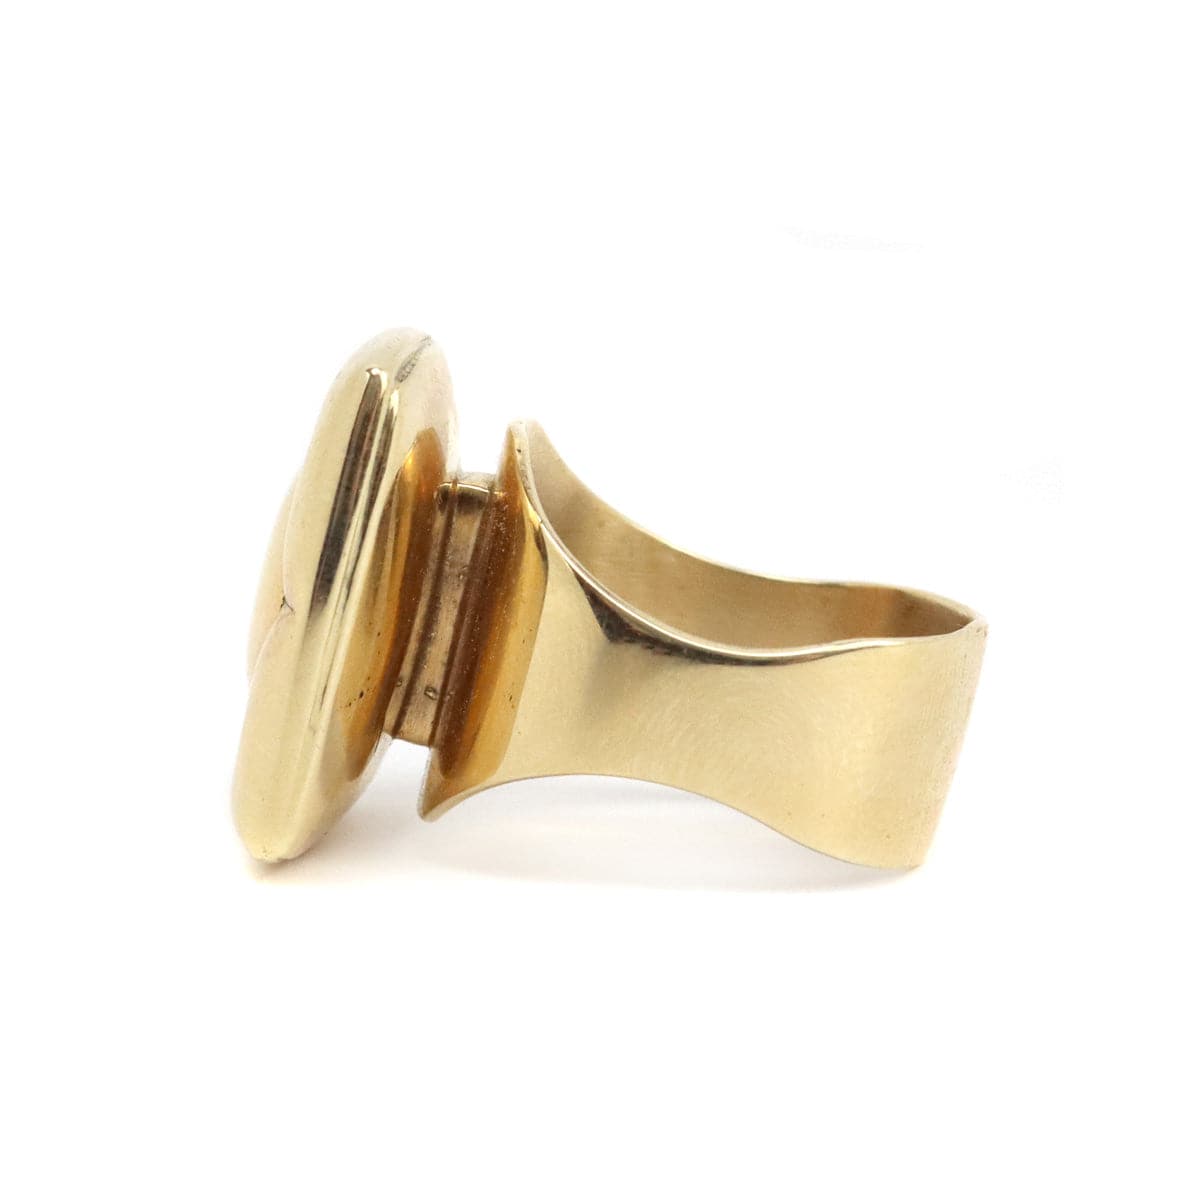 Frank Frank Jr. - 14K Gold Repousse Ring, size 10.75 (J91699-0123-007) 4